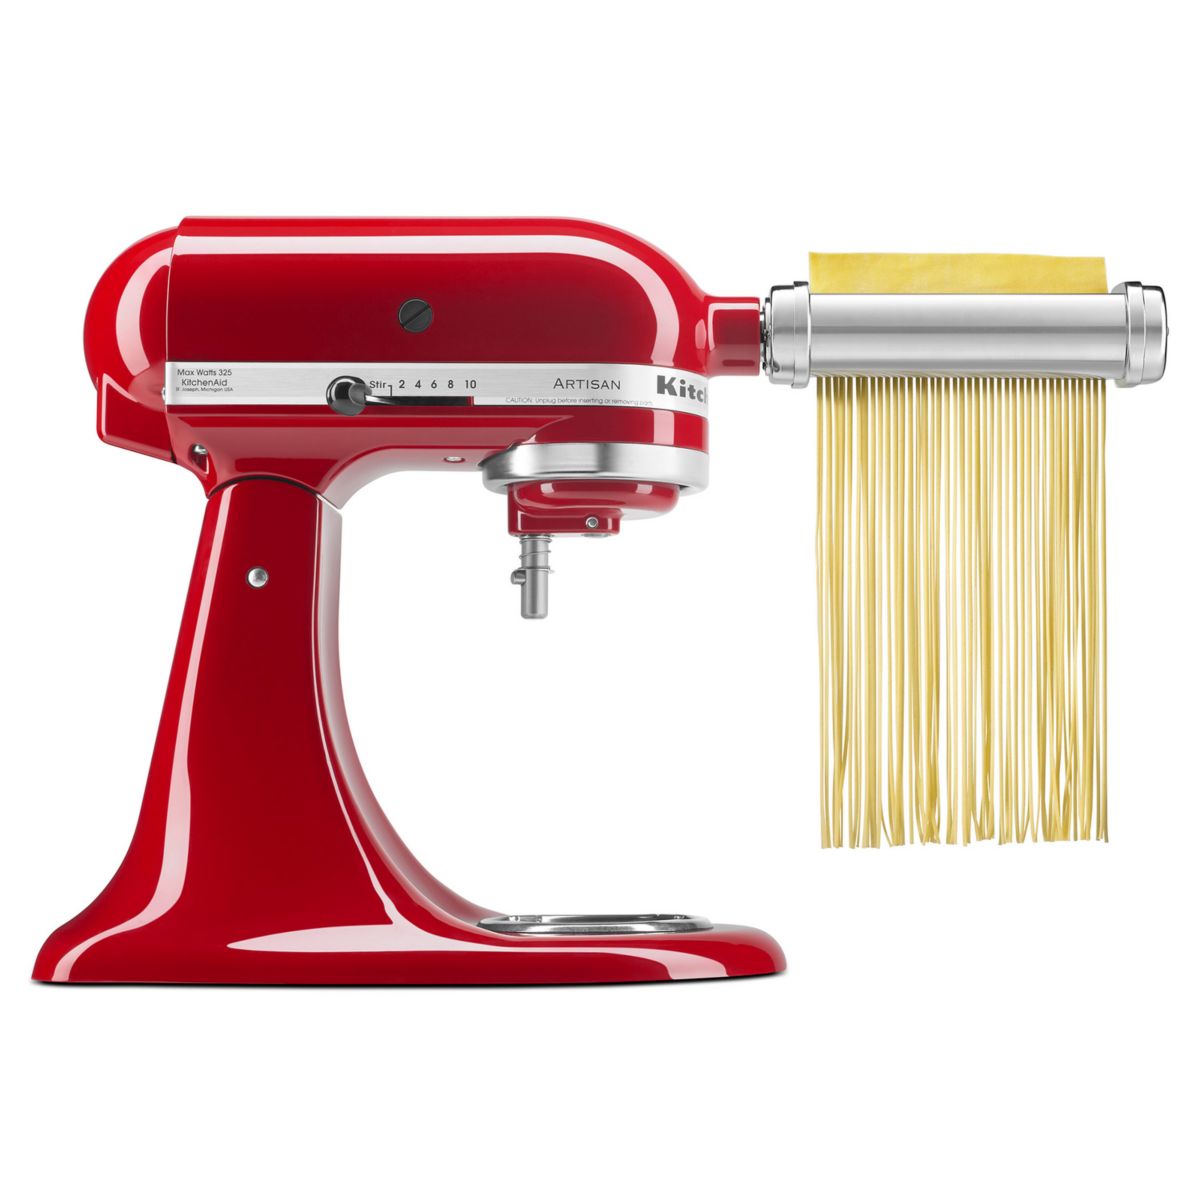 KitchenAid® Набор роликов и ножей для макарон из 3 предметов KitchenAid